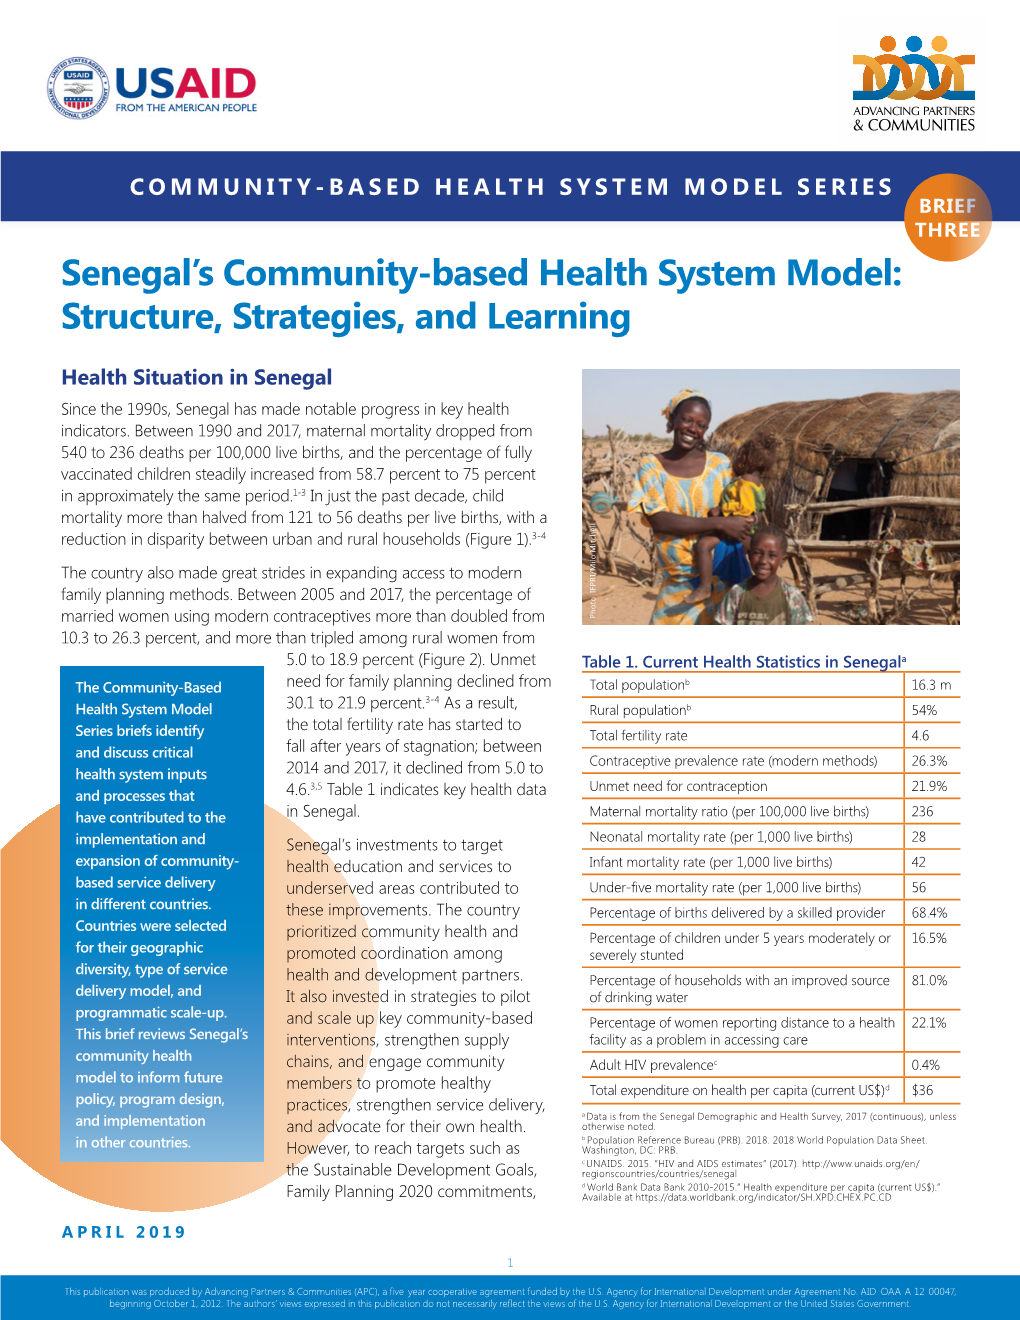 Senegal's Community-Based Health System Model